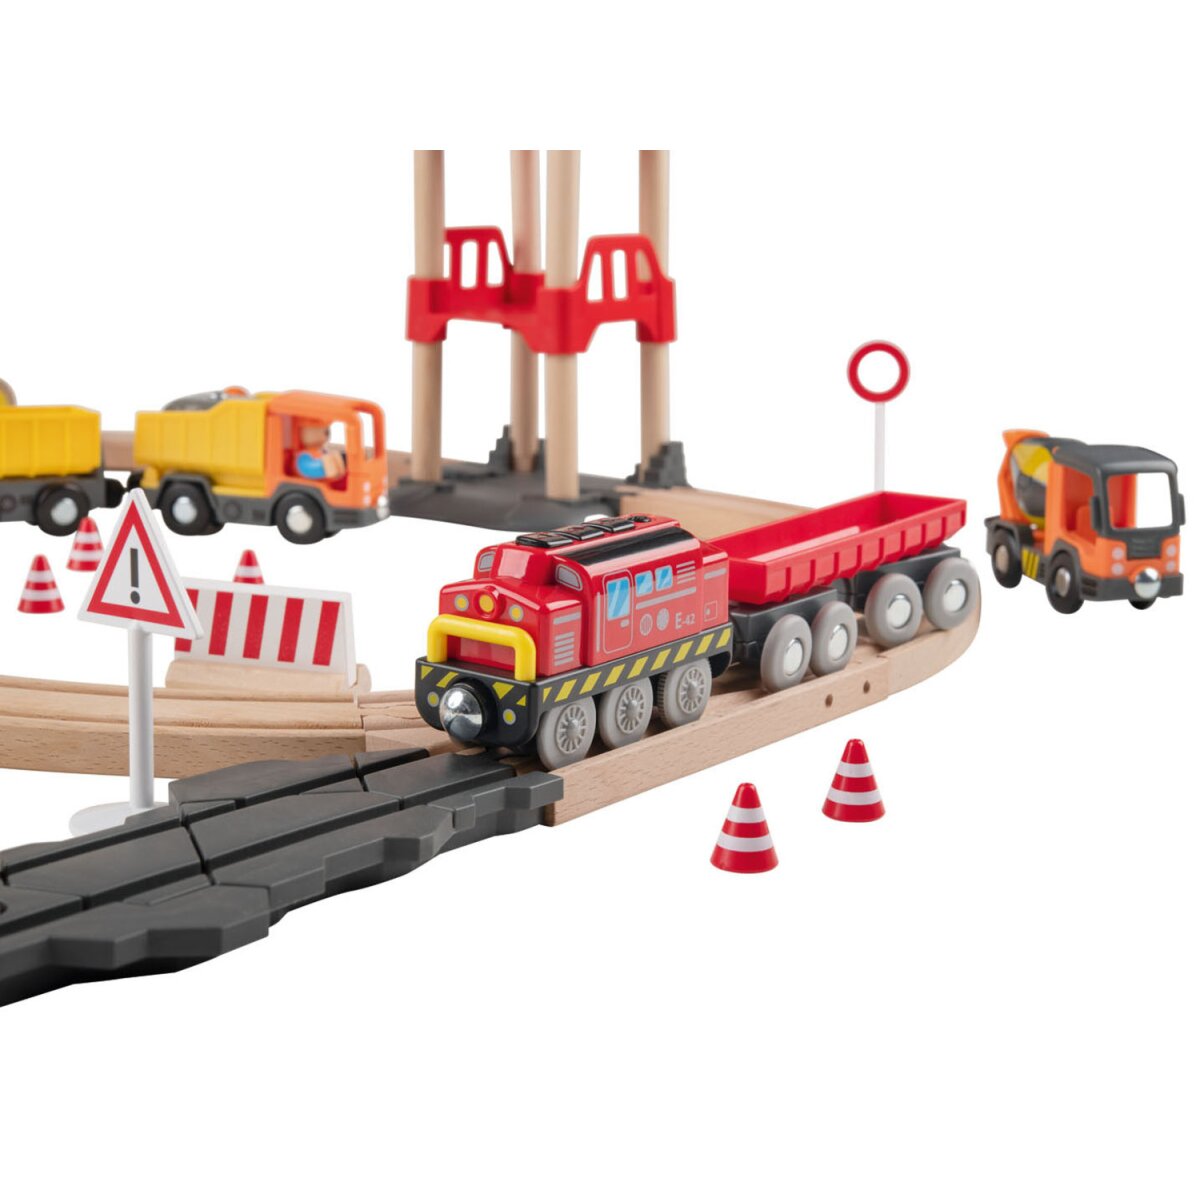 Playtive Holz-Eisenbahn-Set Baustelle, mit Buchenholz - B-Ware sehr gut,  26,99 € | Holzspielzeuge